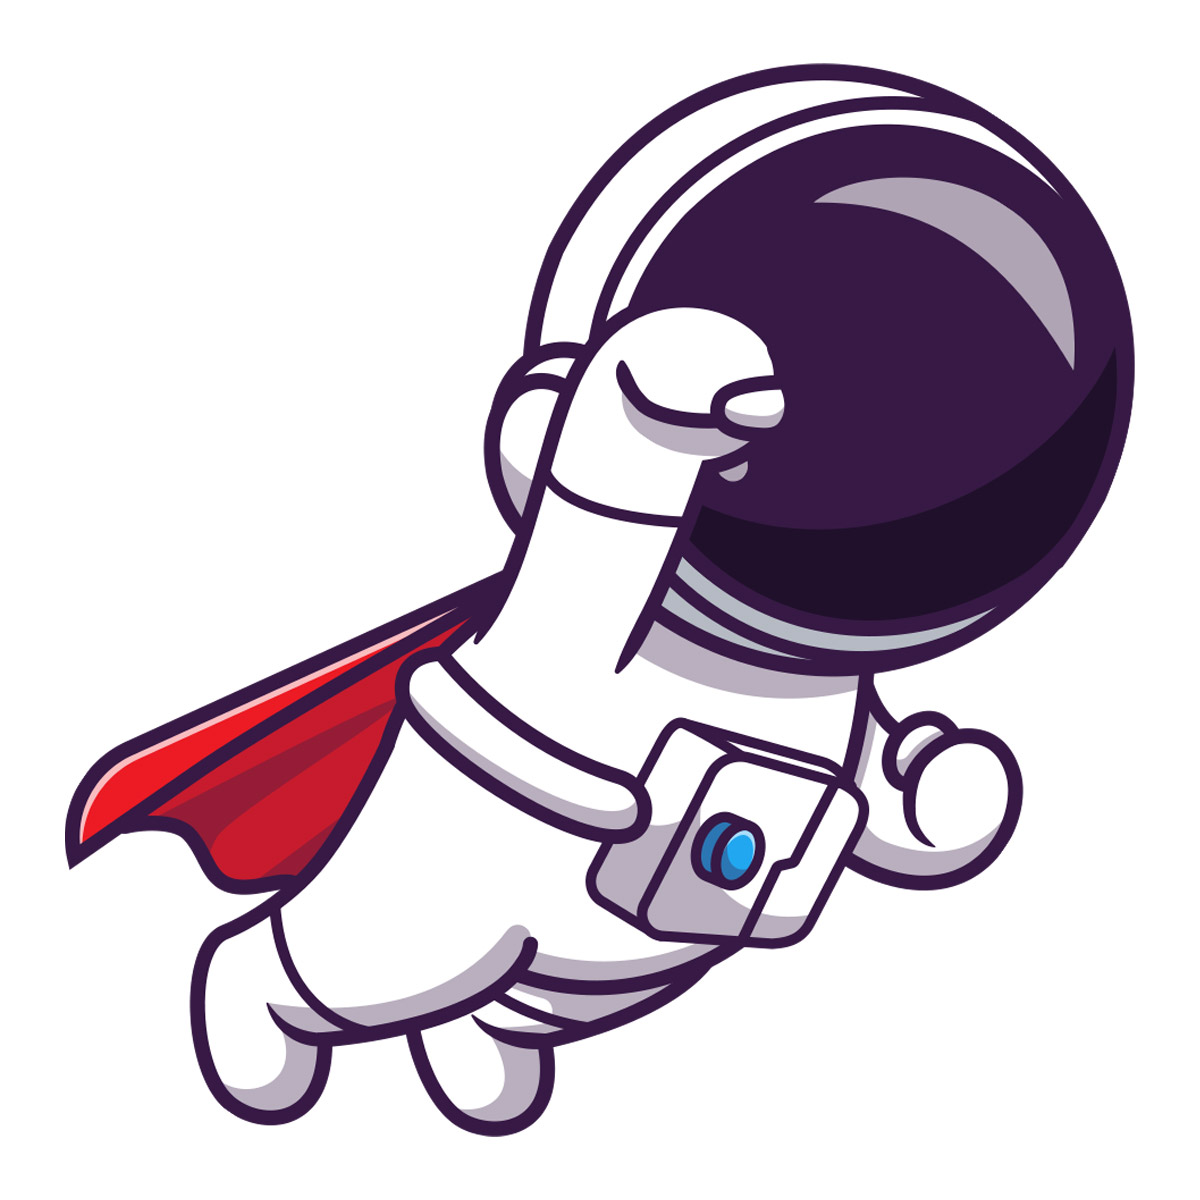 Adesivo de Parede - Astronauta Super-herói